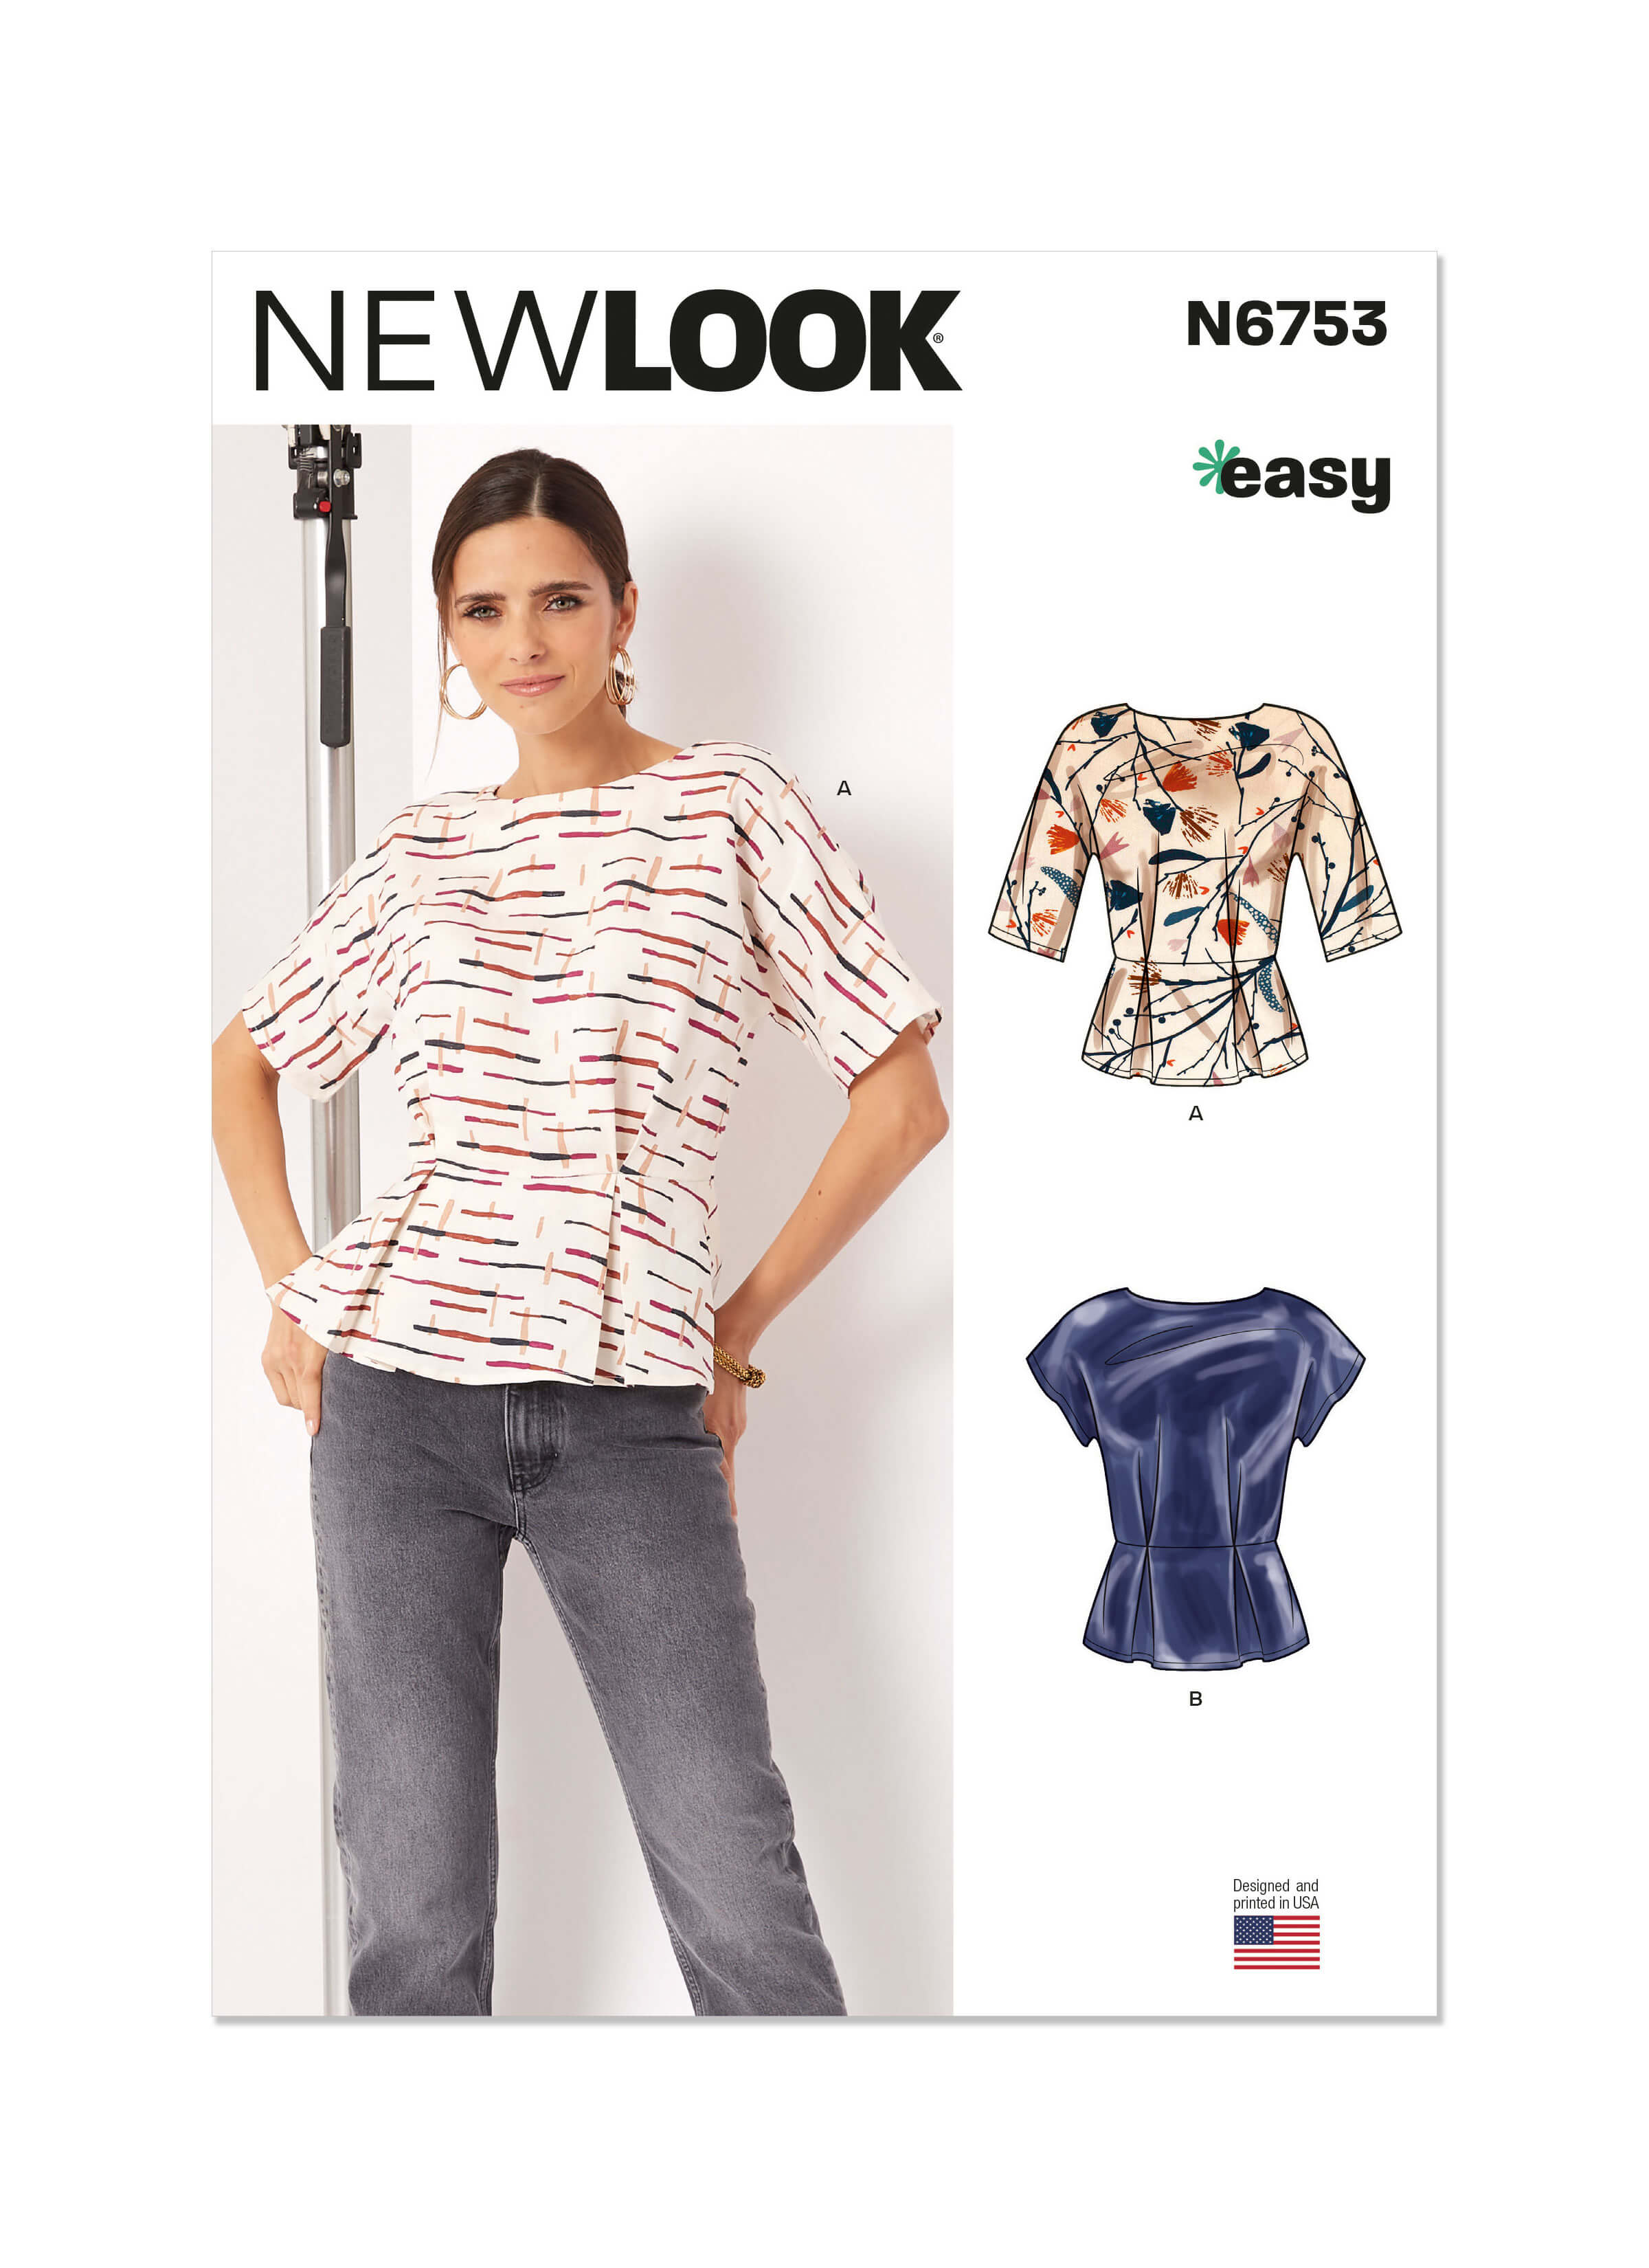 New Look Sewing Pattern N6753 Misses' Top With Sleeve Variations